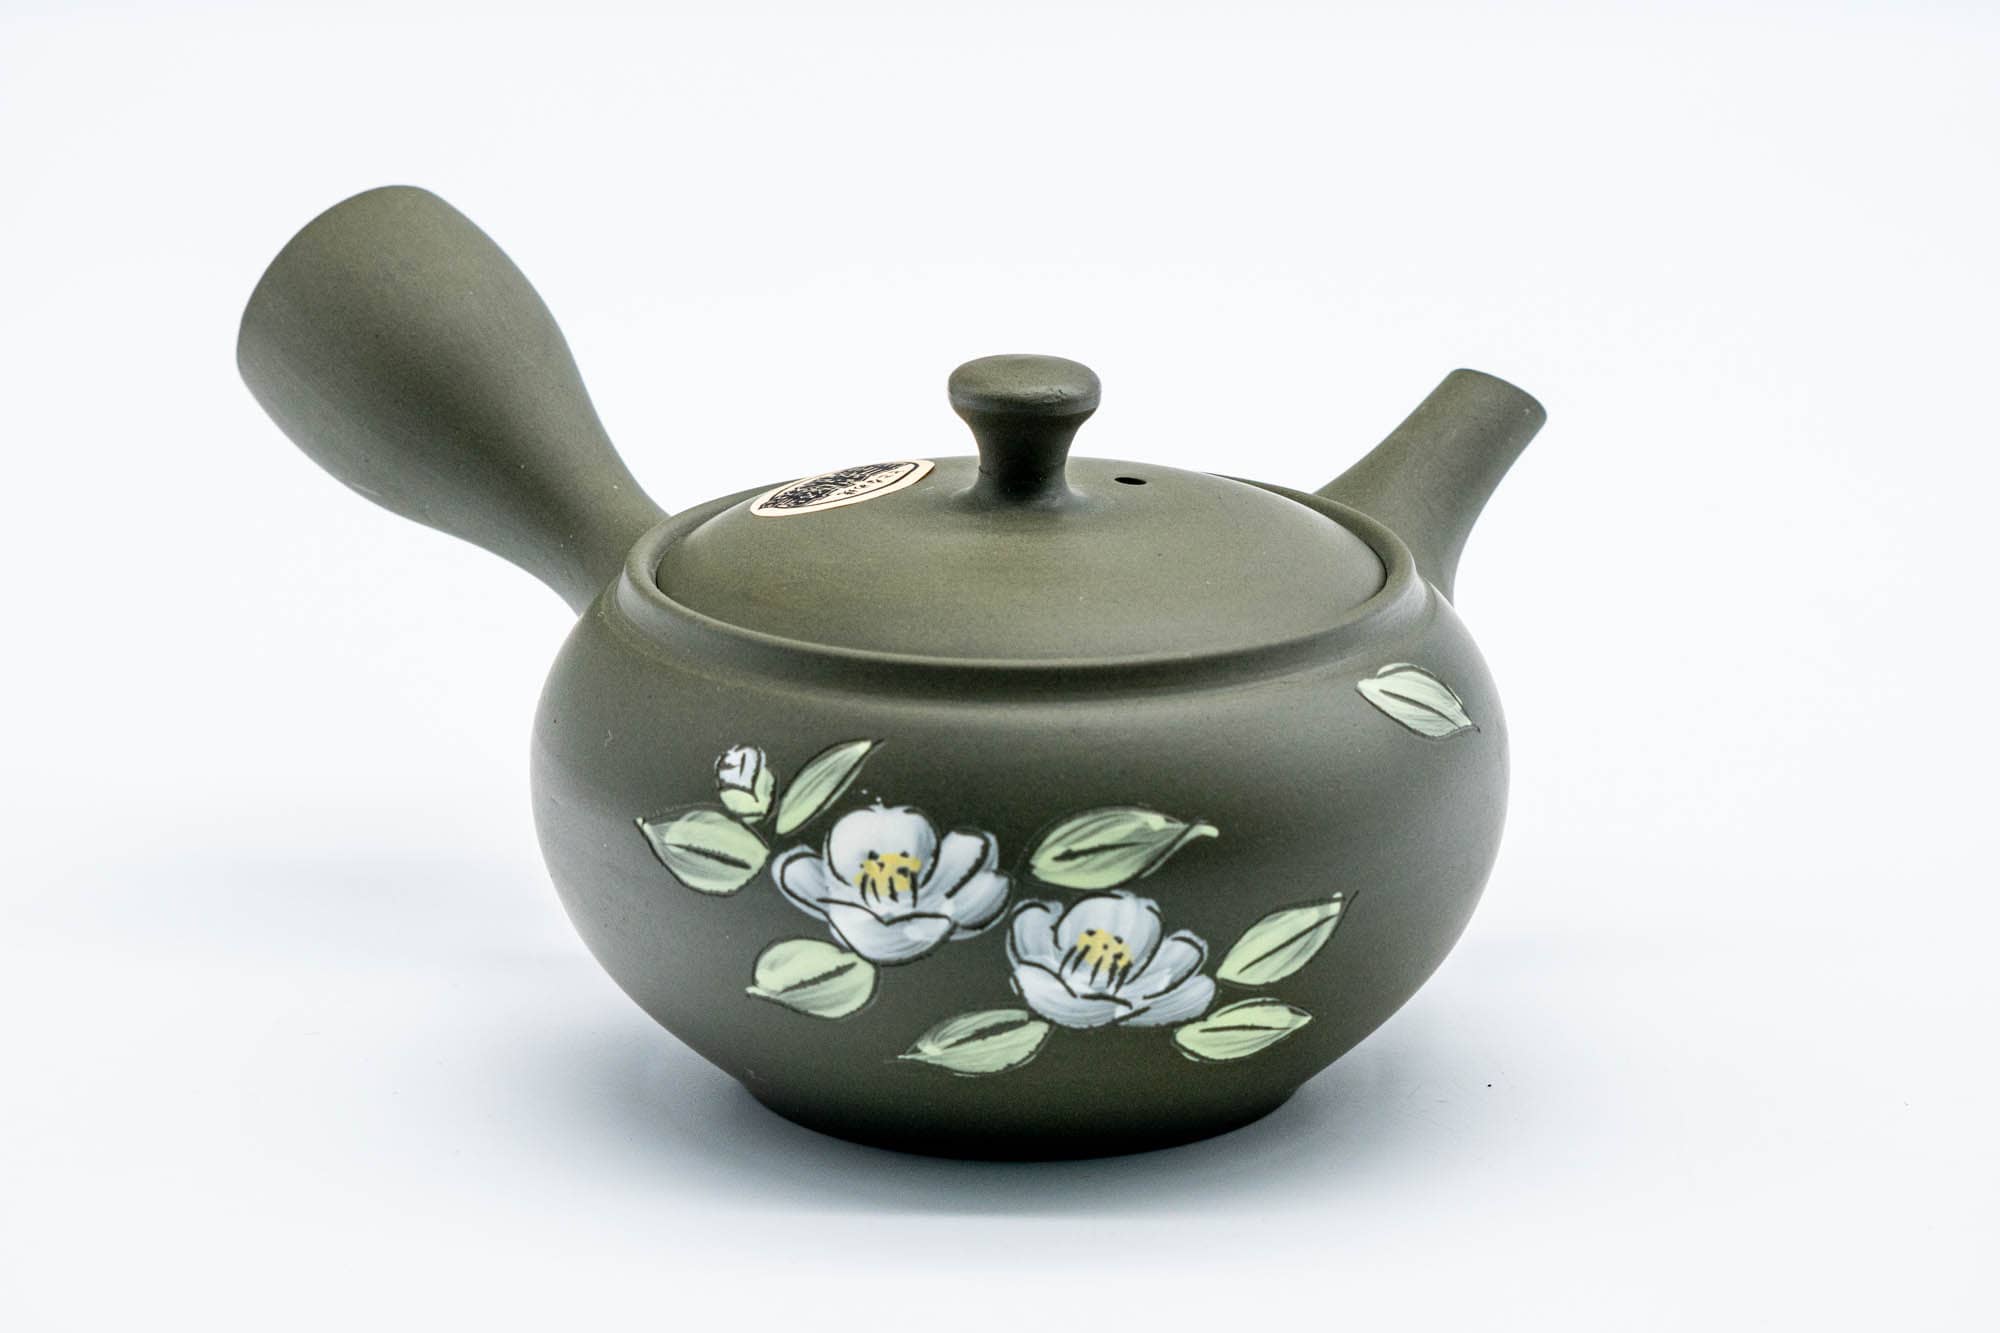 Japanese Kyusu - 春秋窯 Shunju Kiln - Camellia Ryokudei Tokoname-yaki Ceramic Teapot - 220ml